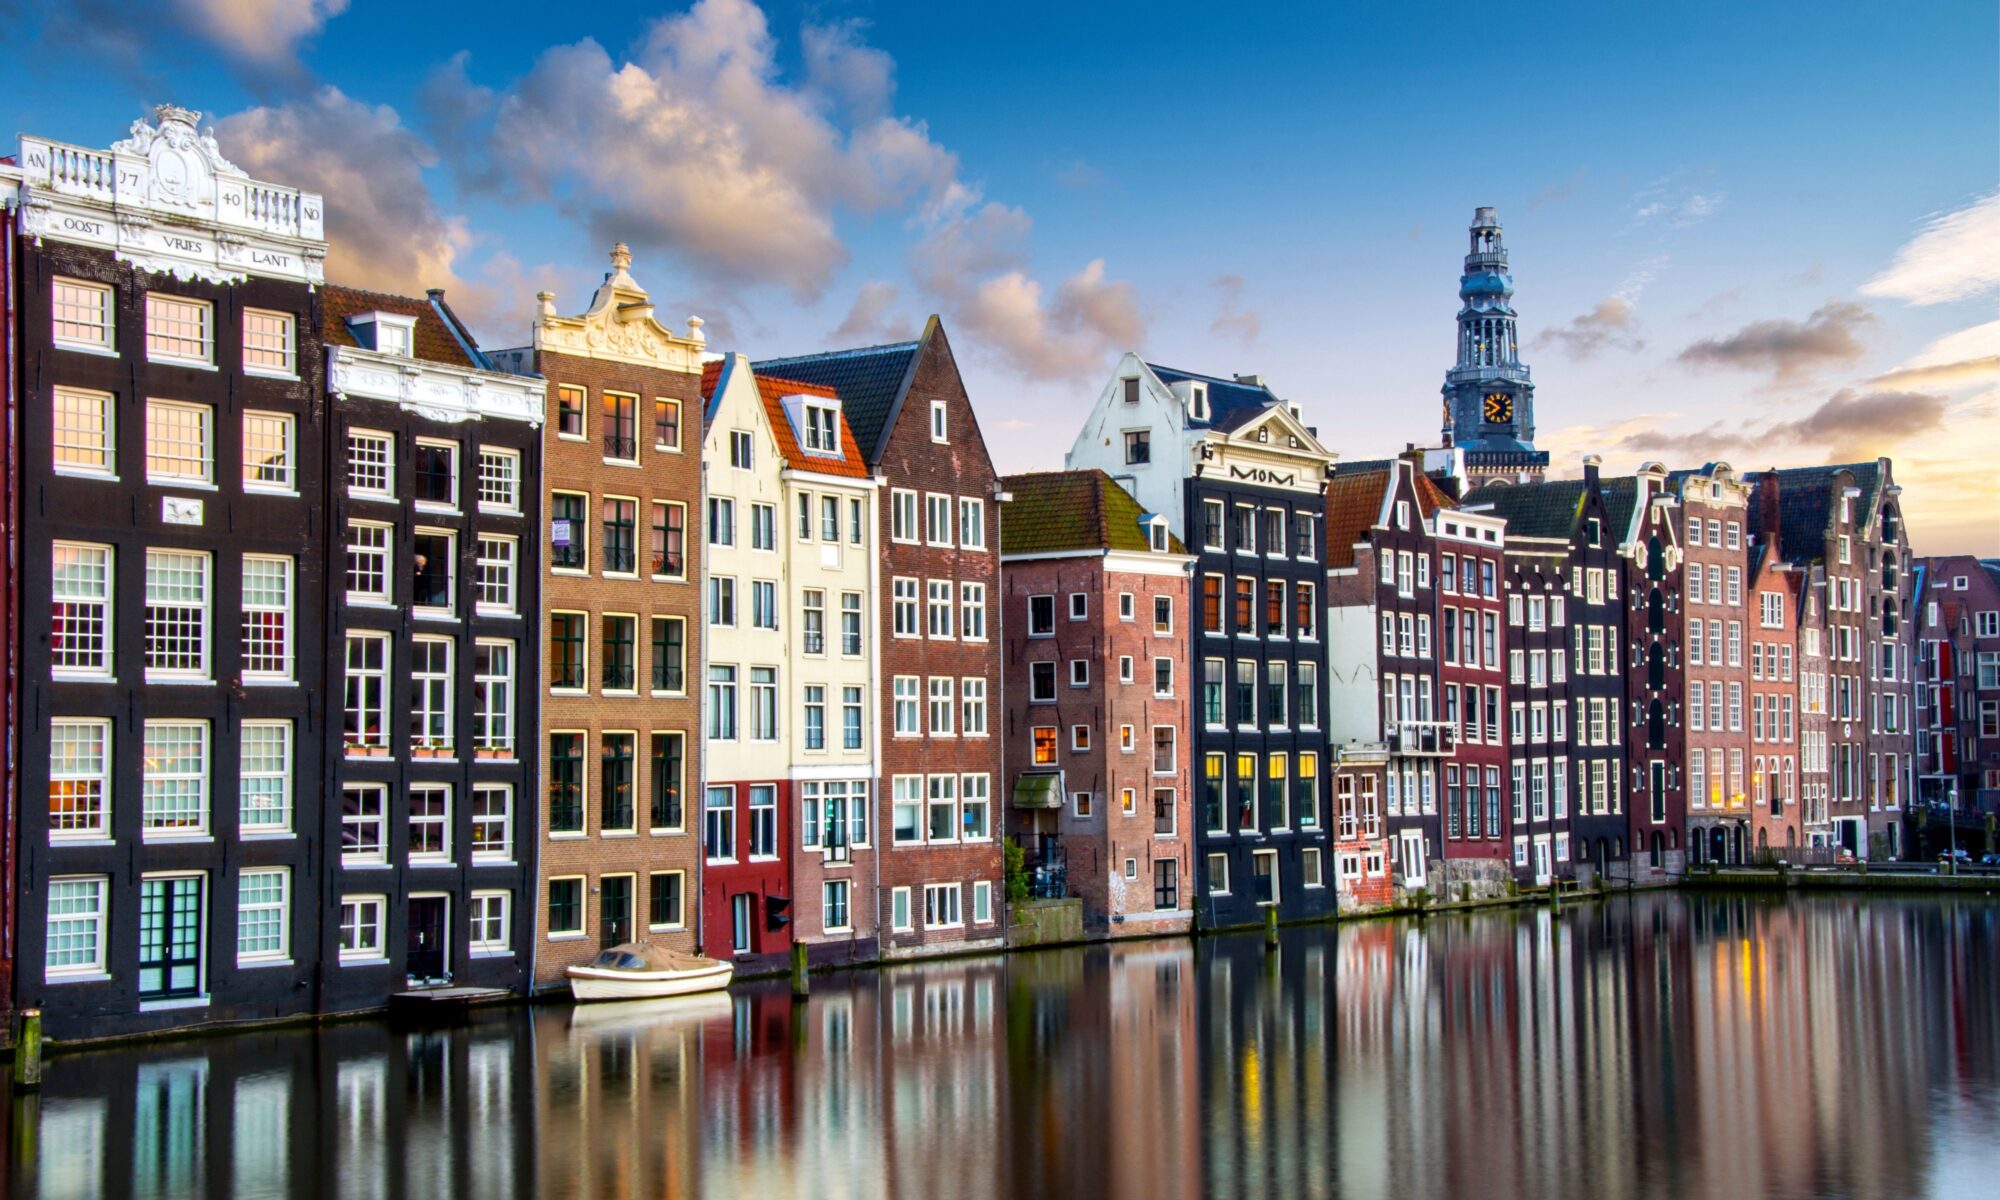 Hotels in Amsterdam Netherlands